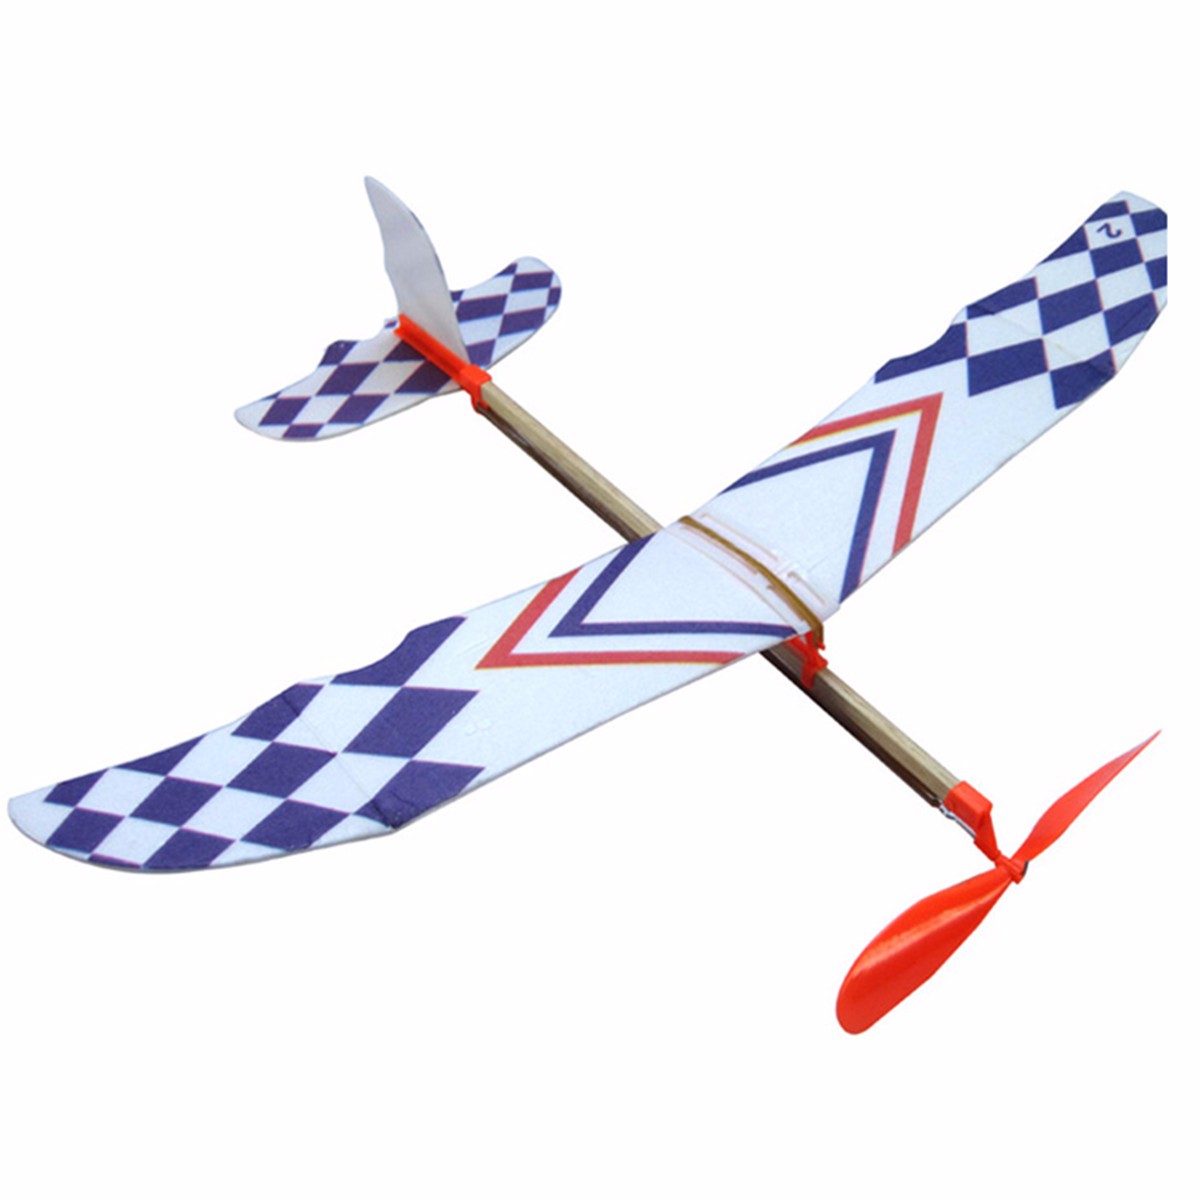 5PCS-DIY-Foam-Plane-Elastic-Rubber-Band-Powered-Aircraft-Kit-Model-Toy-1125454